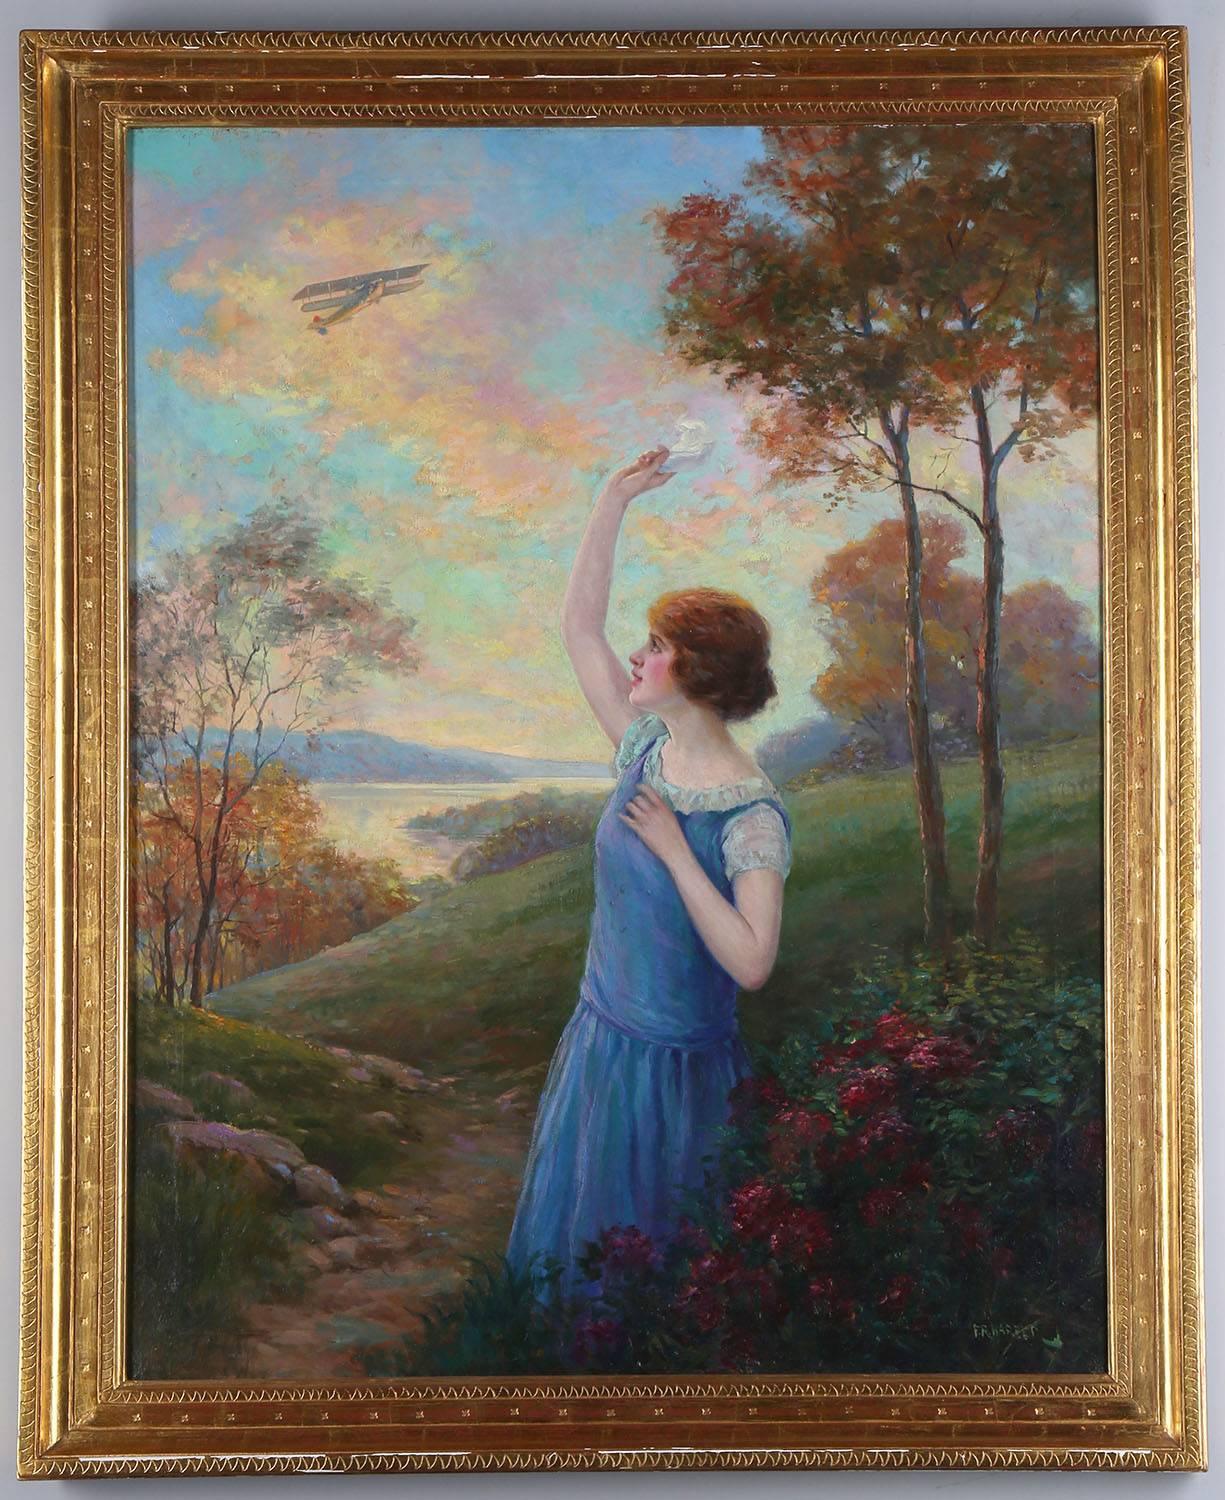 Waving Goodbye - Painting by F.R. Harper